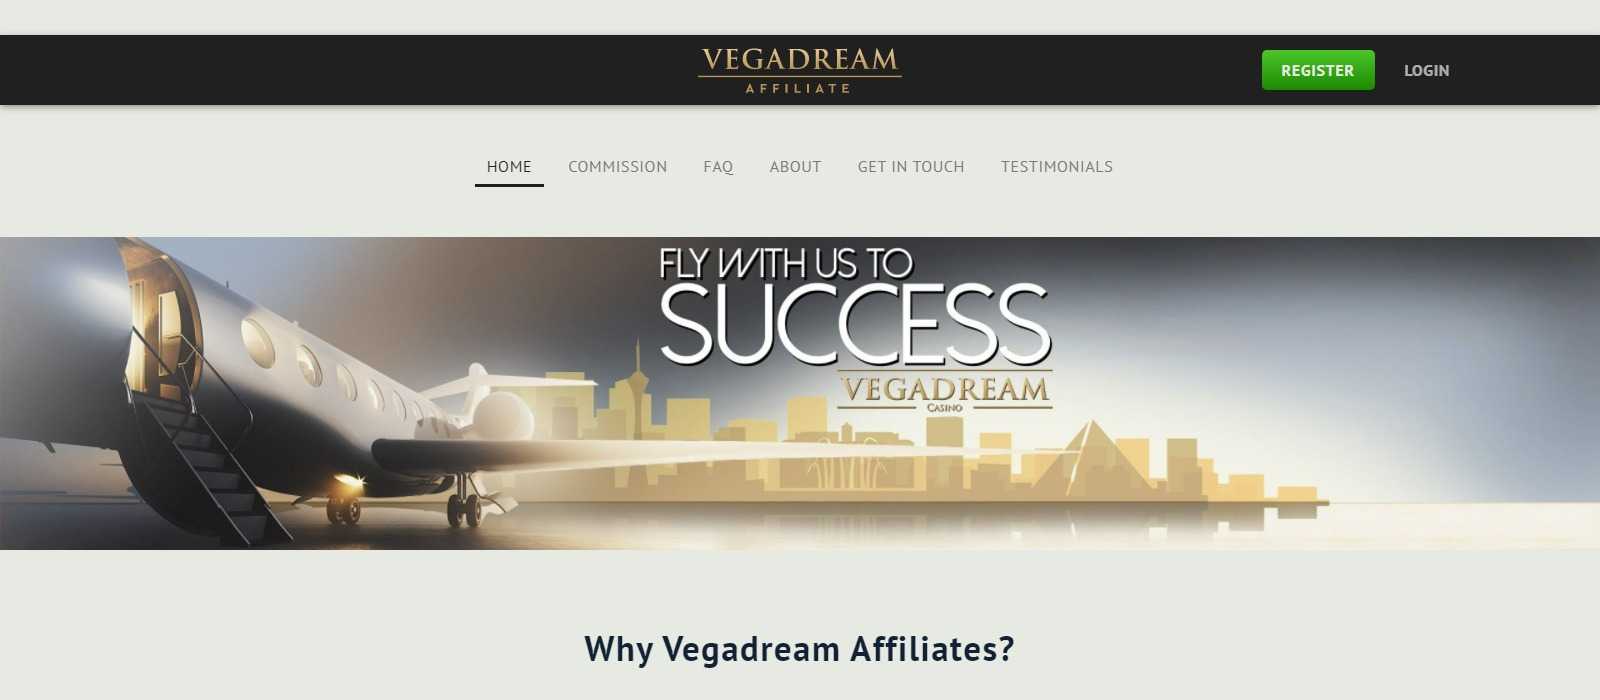 Vegadream Affiliate Program Review: Get Earn Up to 45% Recurring Revenue share